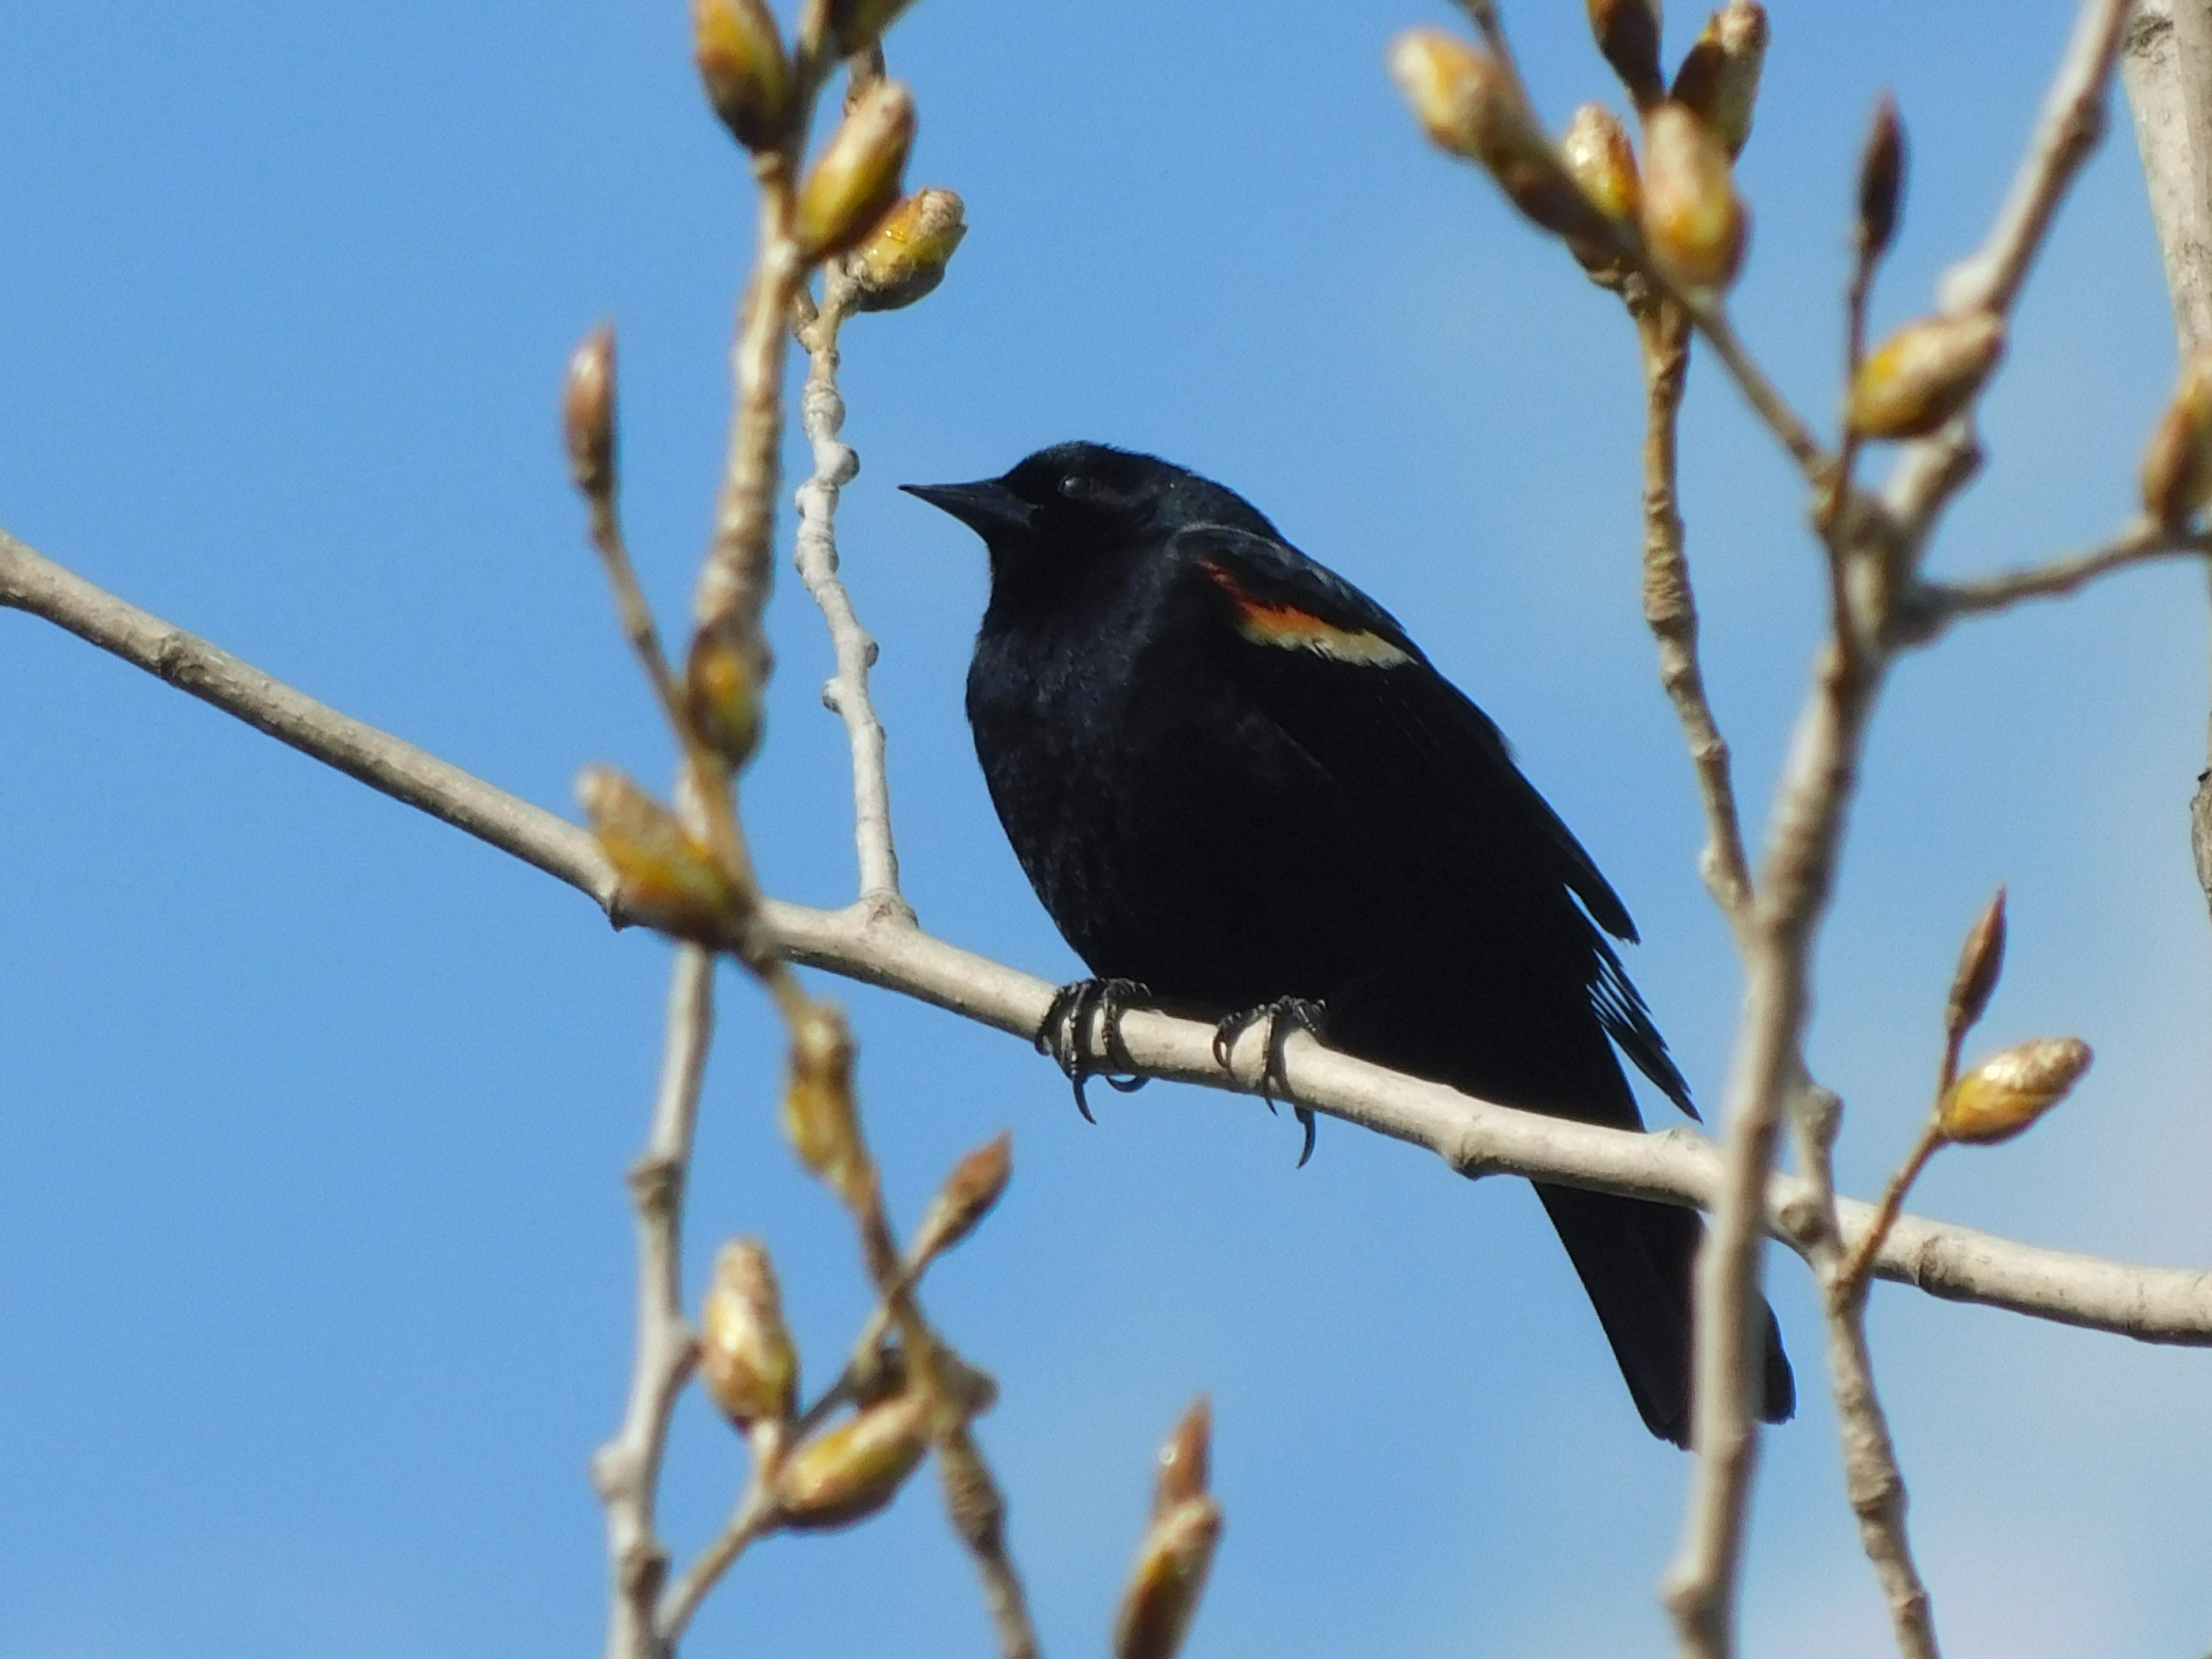 Red-winged blackbird against vibrant blue sky